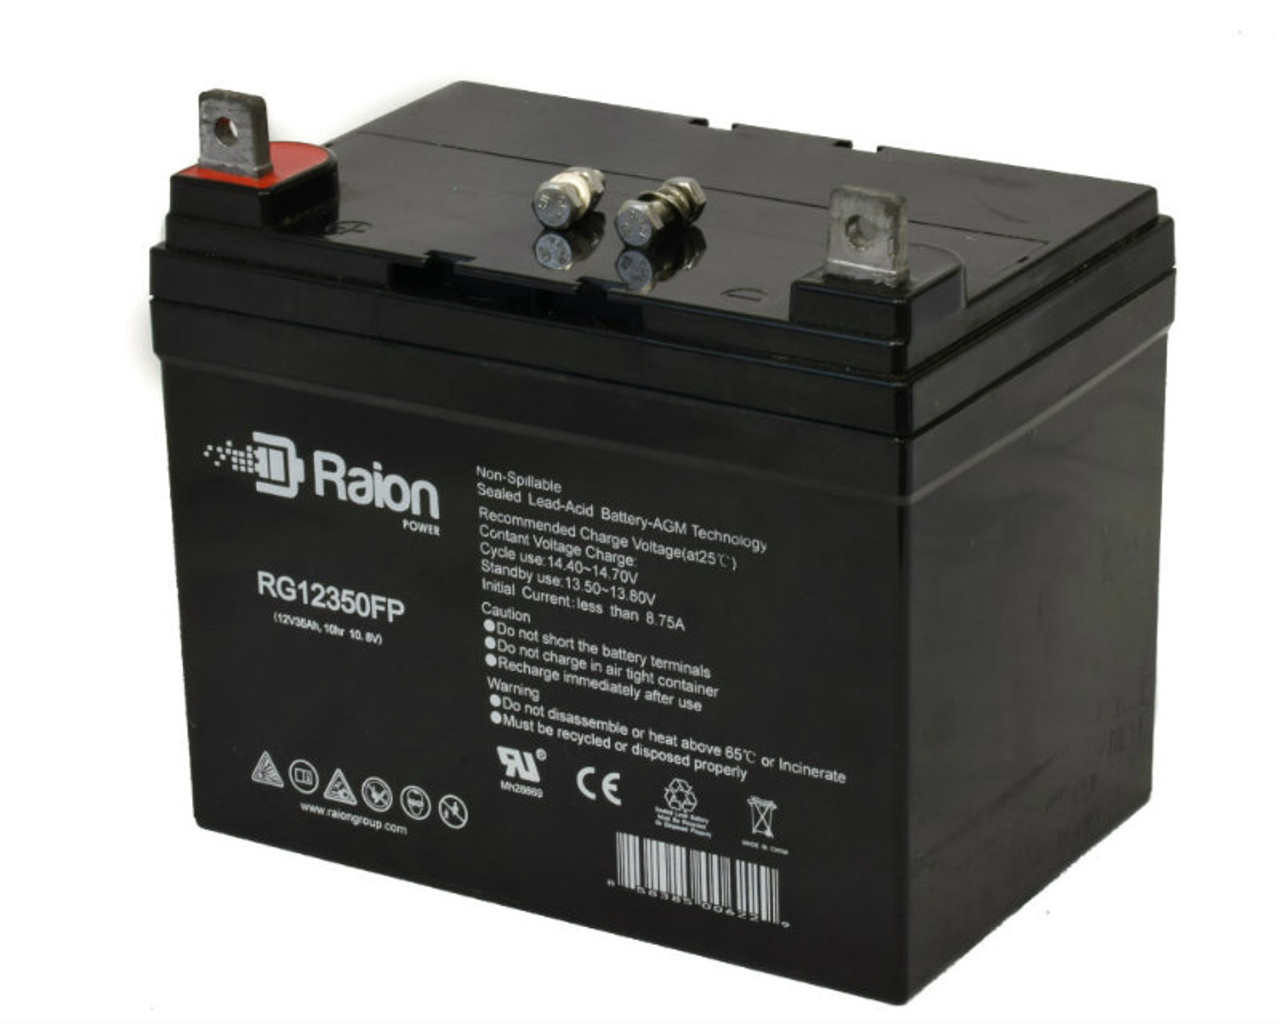 Raion Power Replacement 12V 35Ah RG12350FP Battery for Stinger SPV35